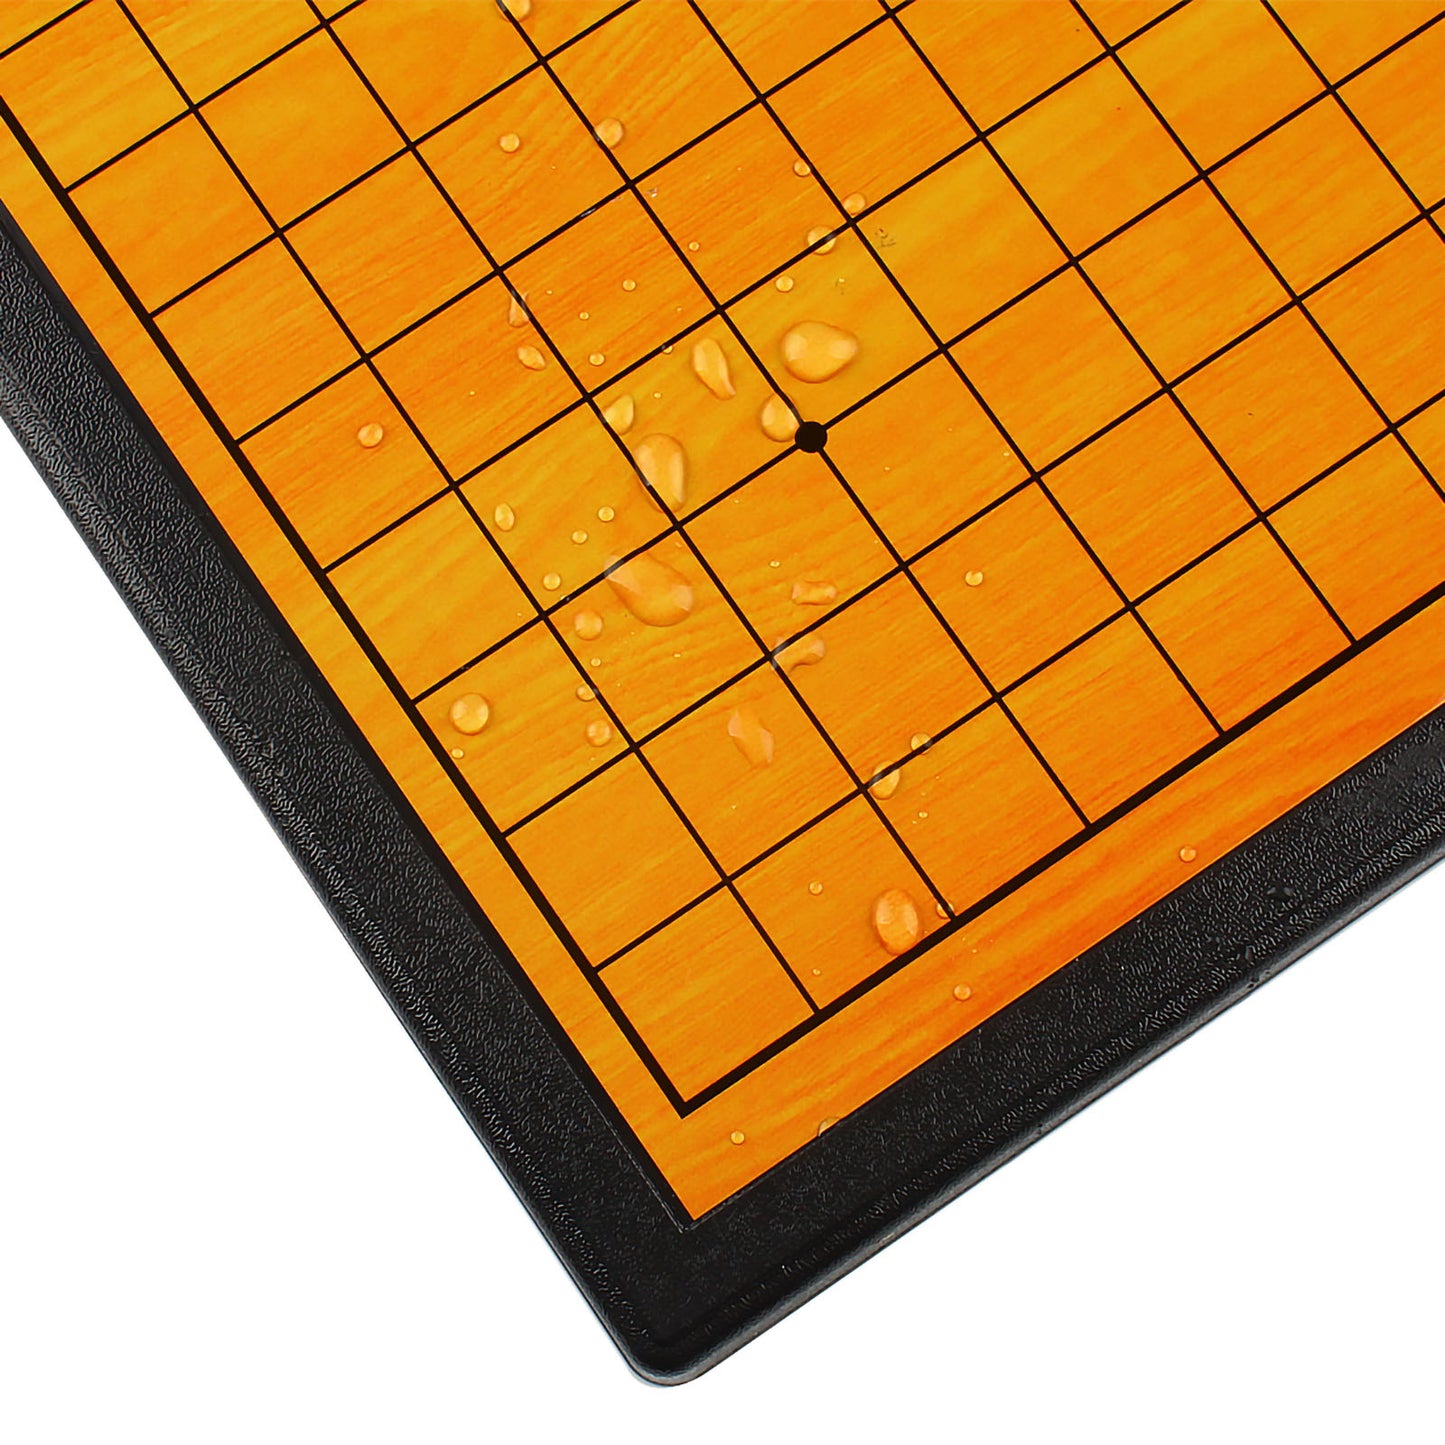 Larcele Folding Magnetic Go Game Set CXWQ-01 (Medium)